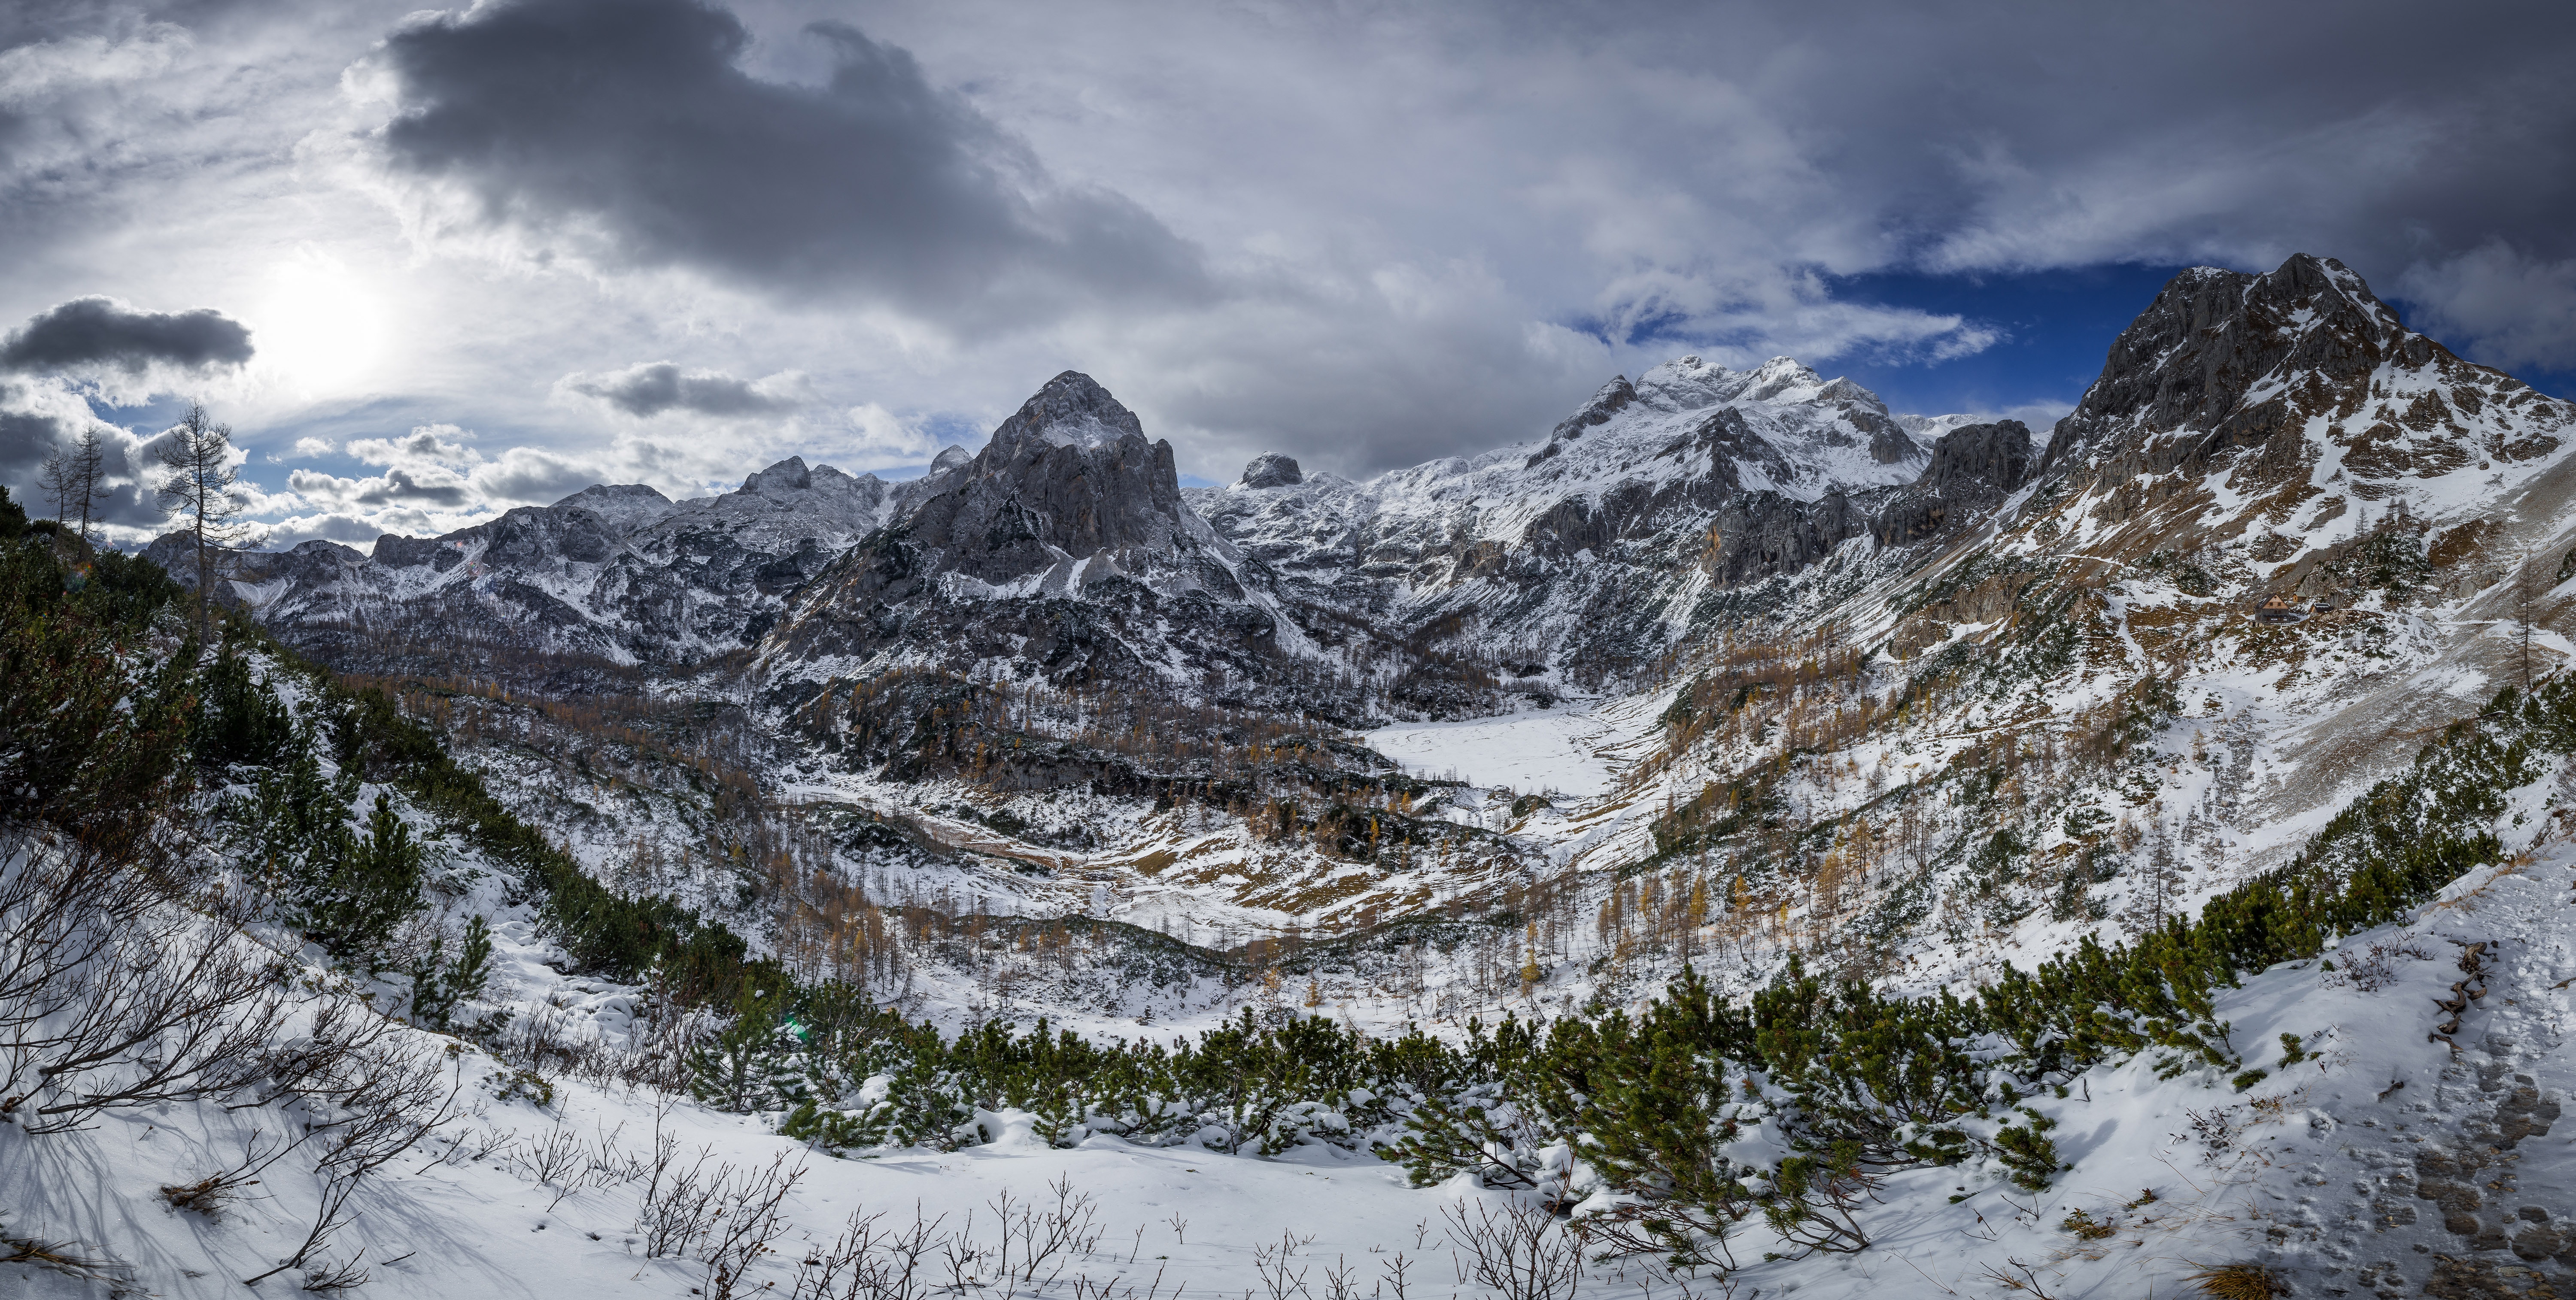 desktop Images mountains, nature, vertex, tops, snow covered, snowbound